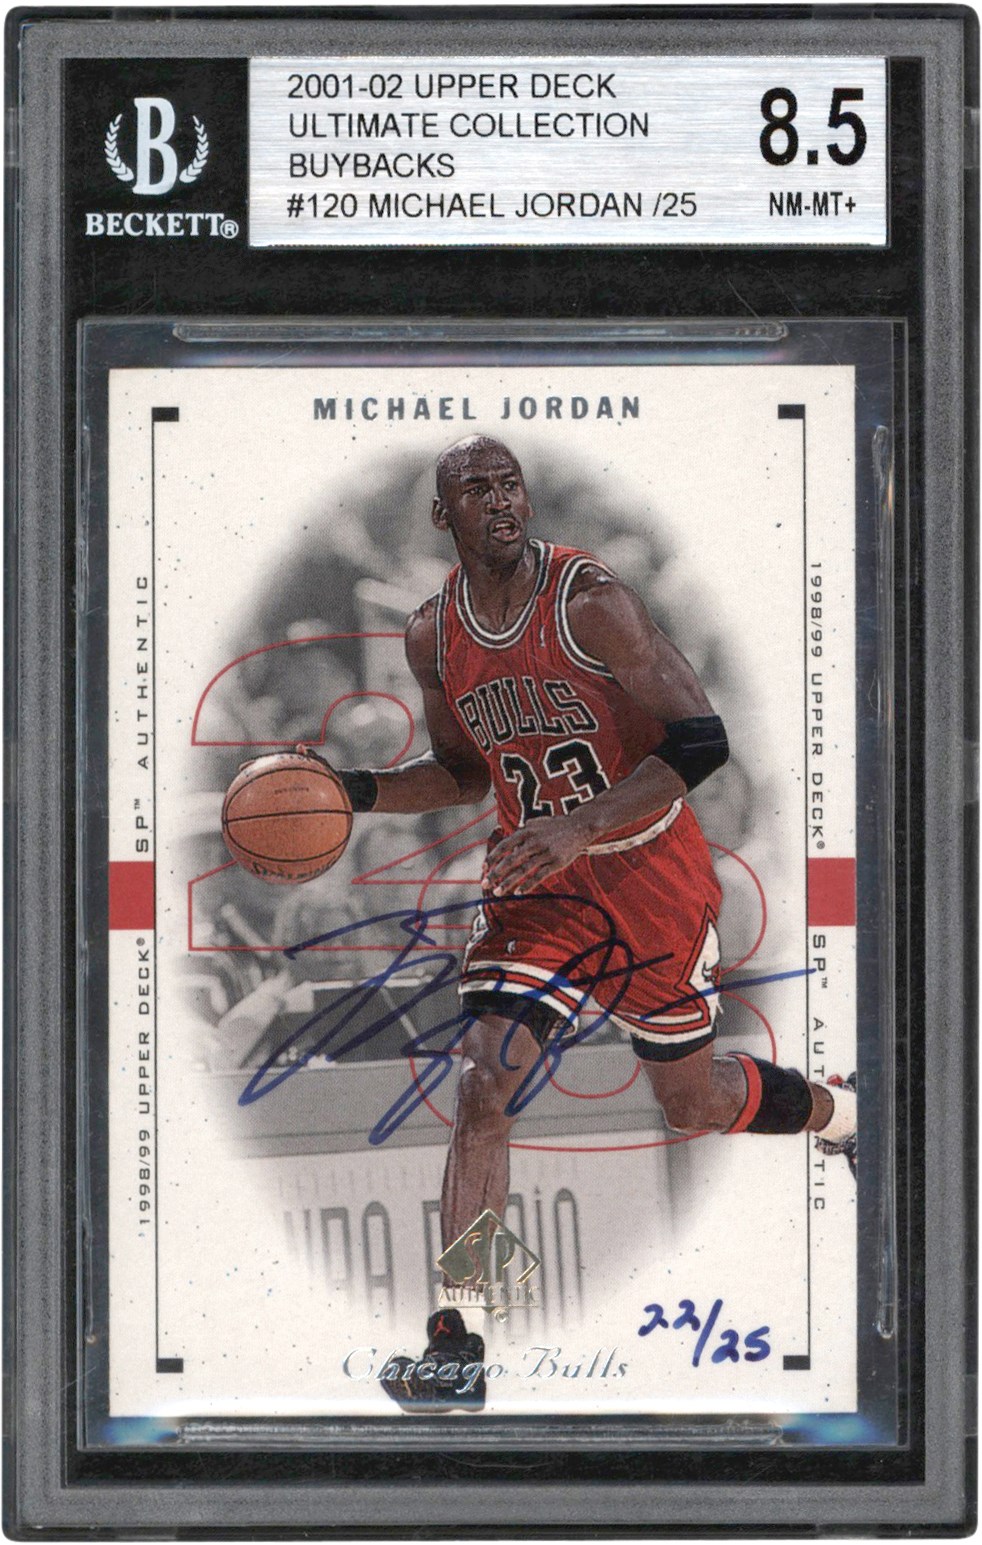 2001-2002 Upper Deck Ultimate Collection Basketball Buybacks #120 Michael Jordan Autograph Card #22/25 BGS NM-MT+ 8.5 Auto 10